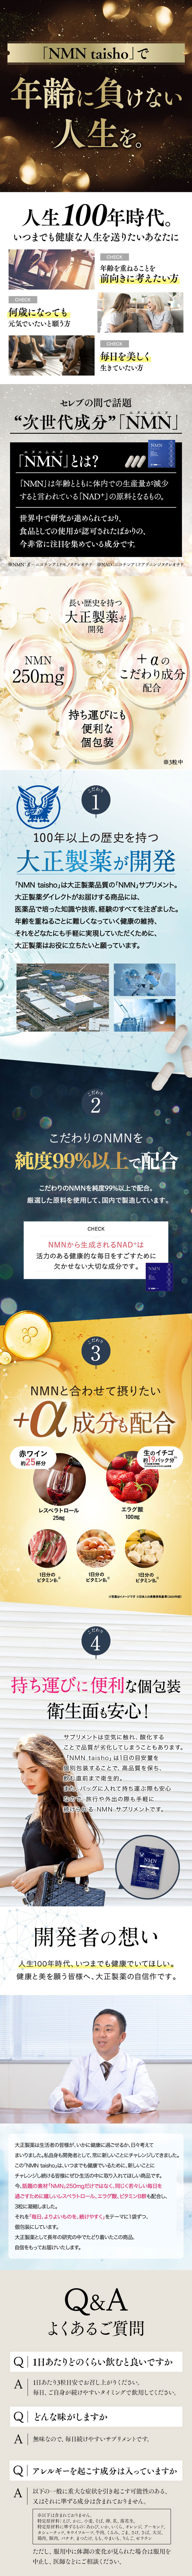 楽天市場】【公式】 大正製薬 NMN taisho 1袋3粒×30袋 90カプセル